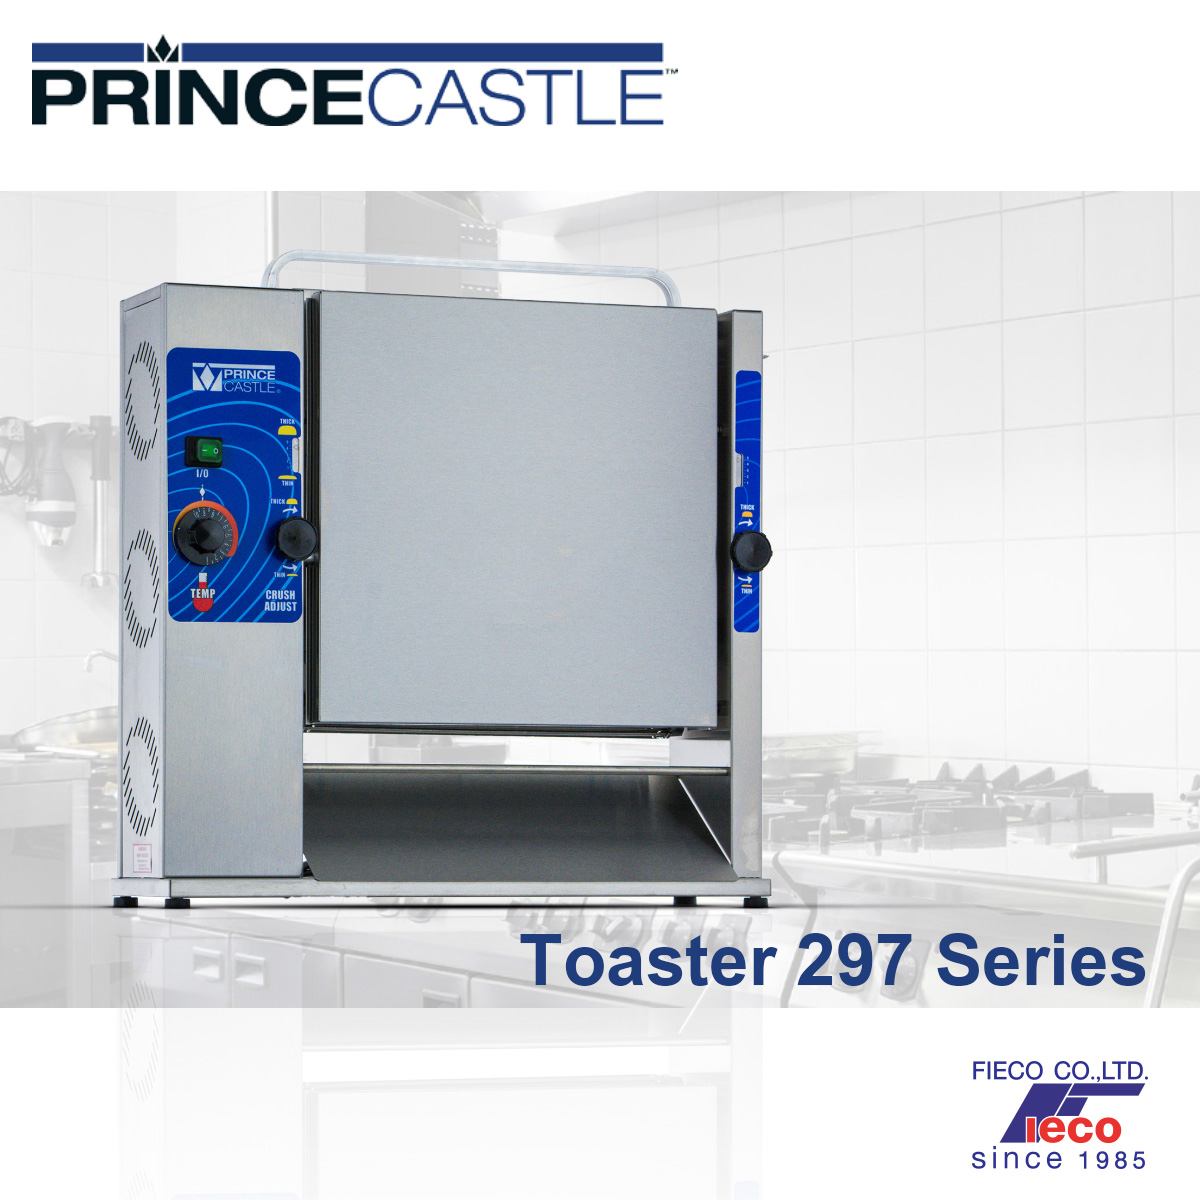 Prince Castle - Toaster